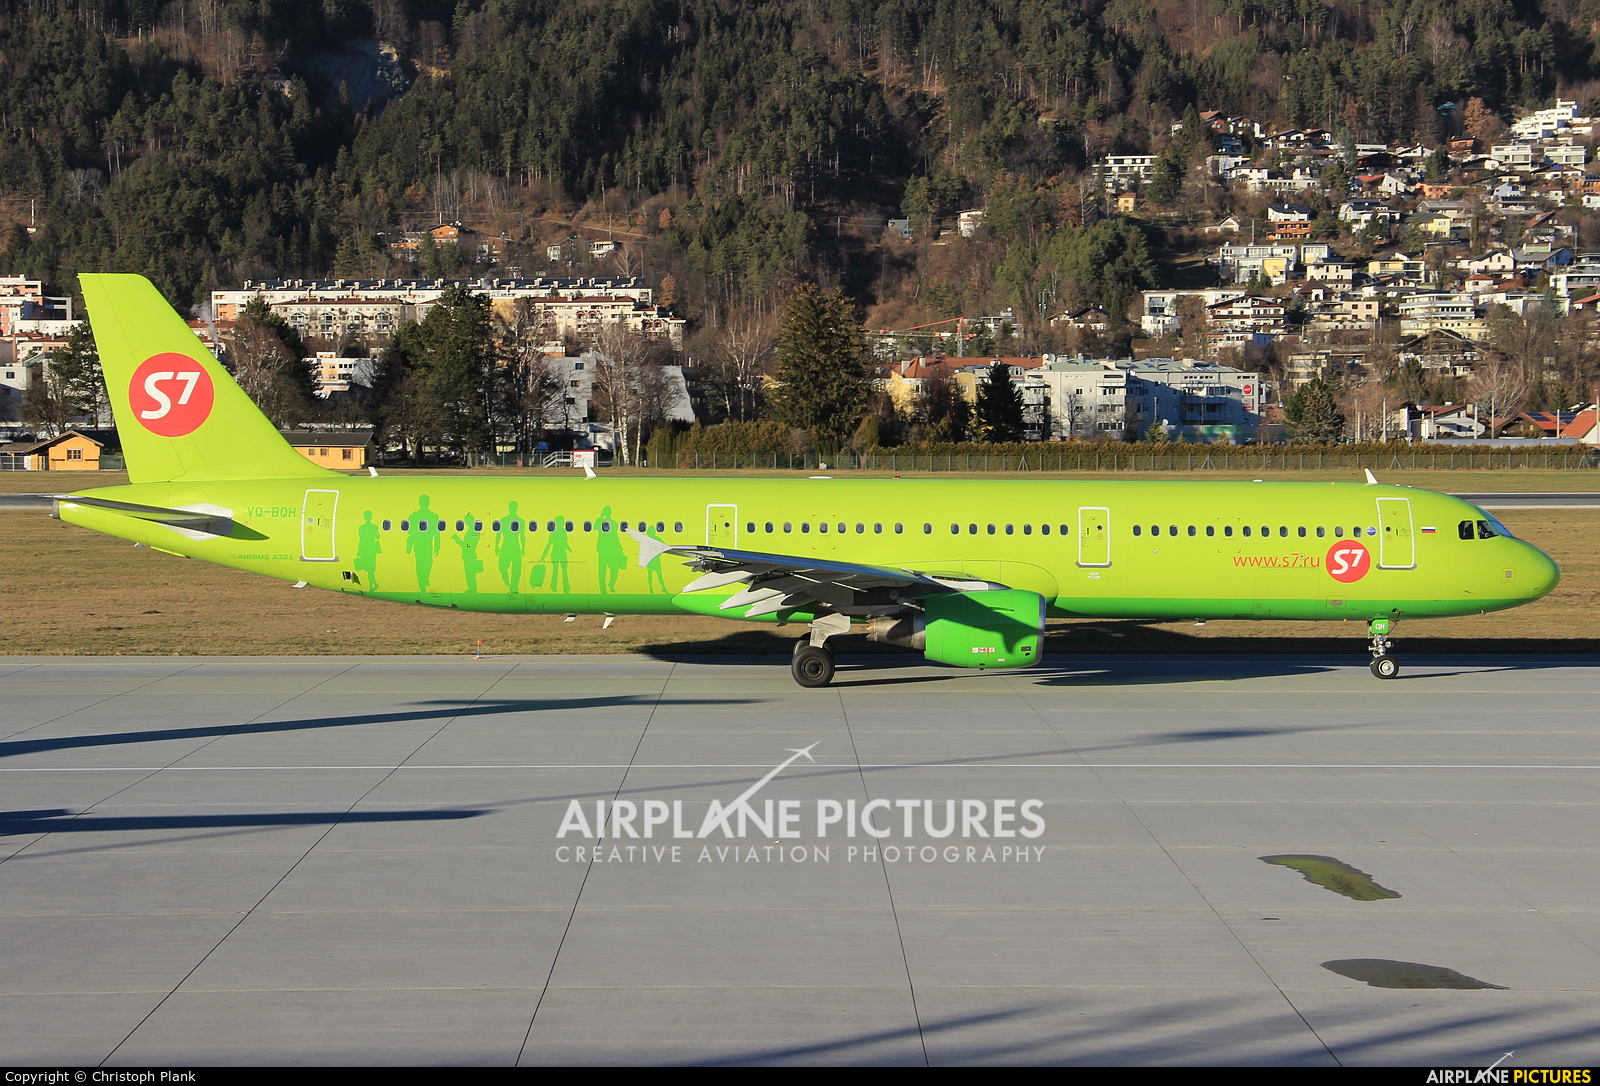 S7 Airlines VQ-BQH aircraft at Innsbruck